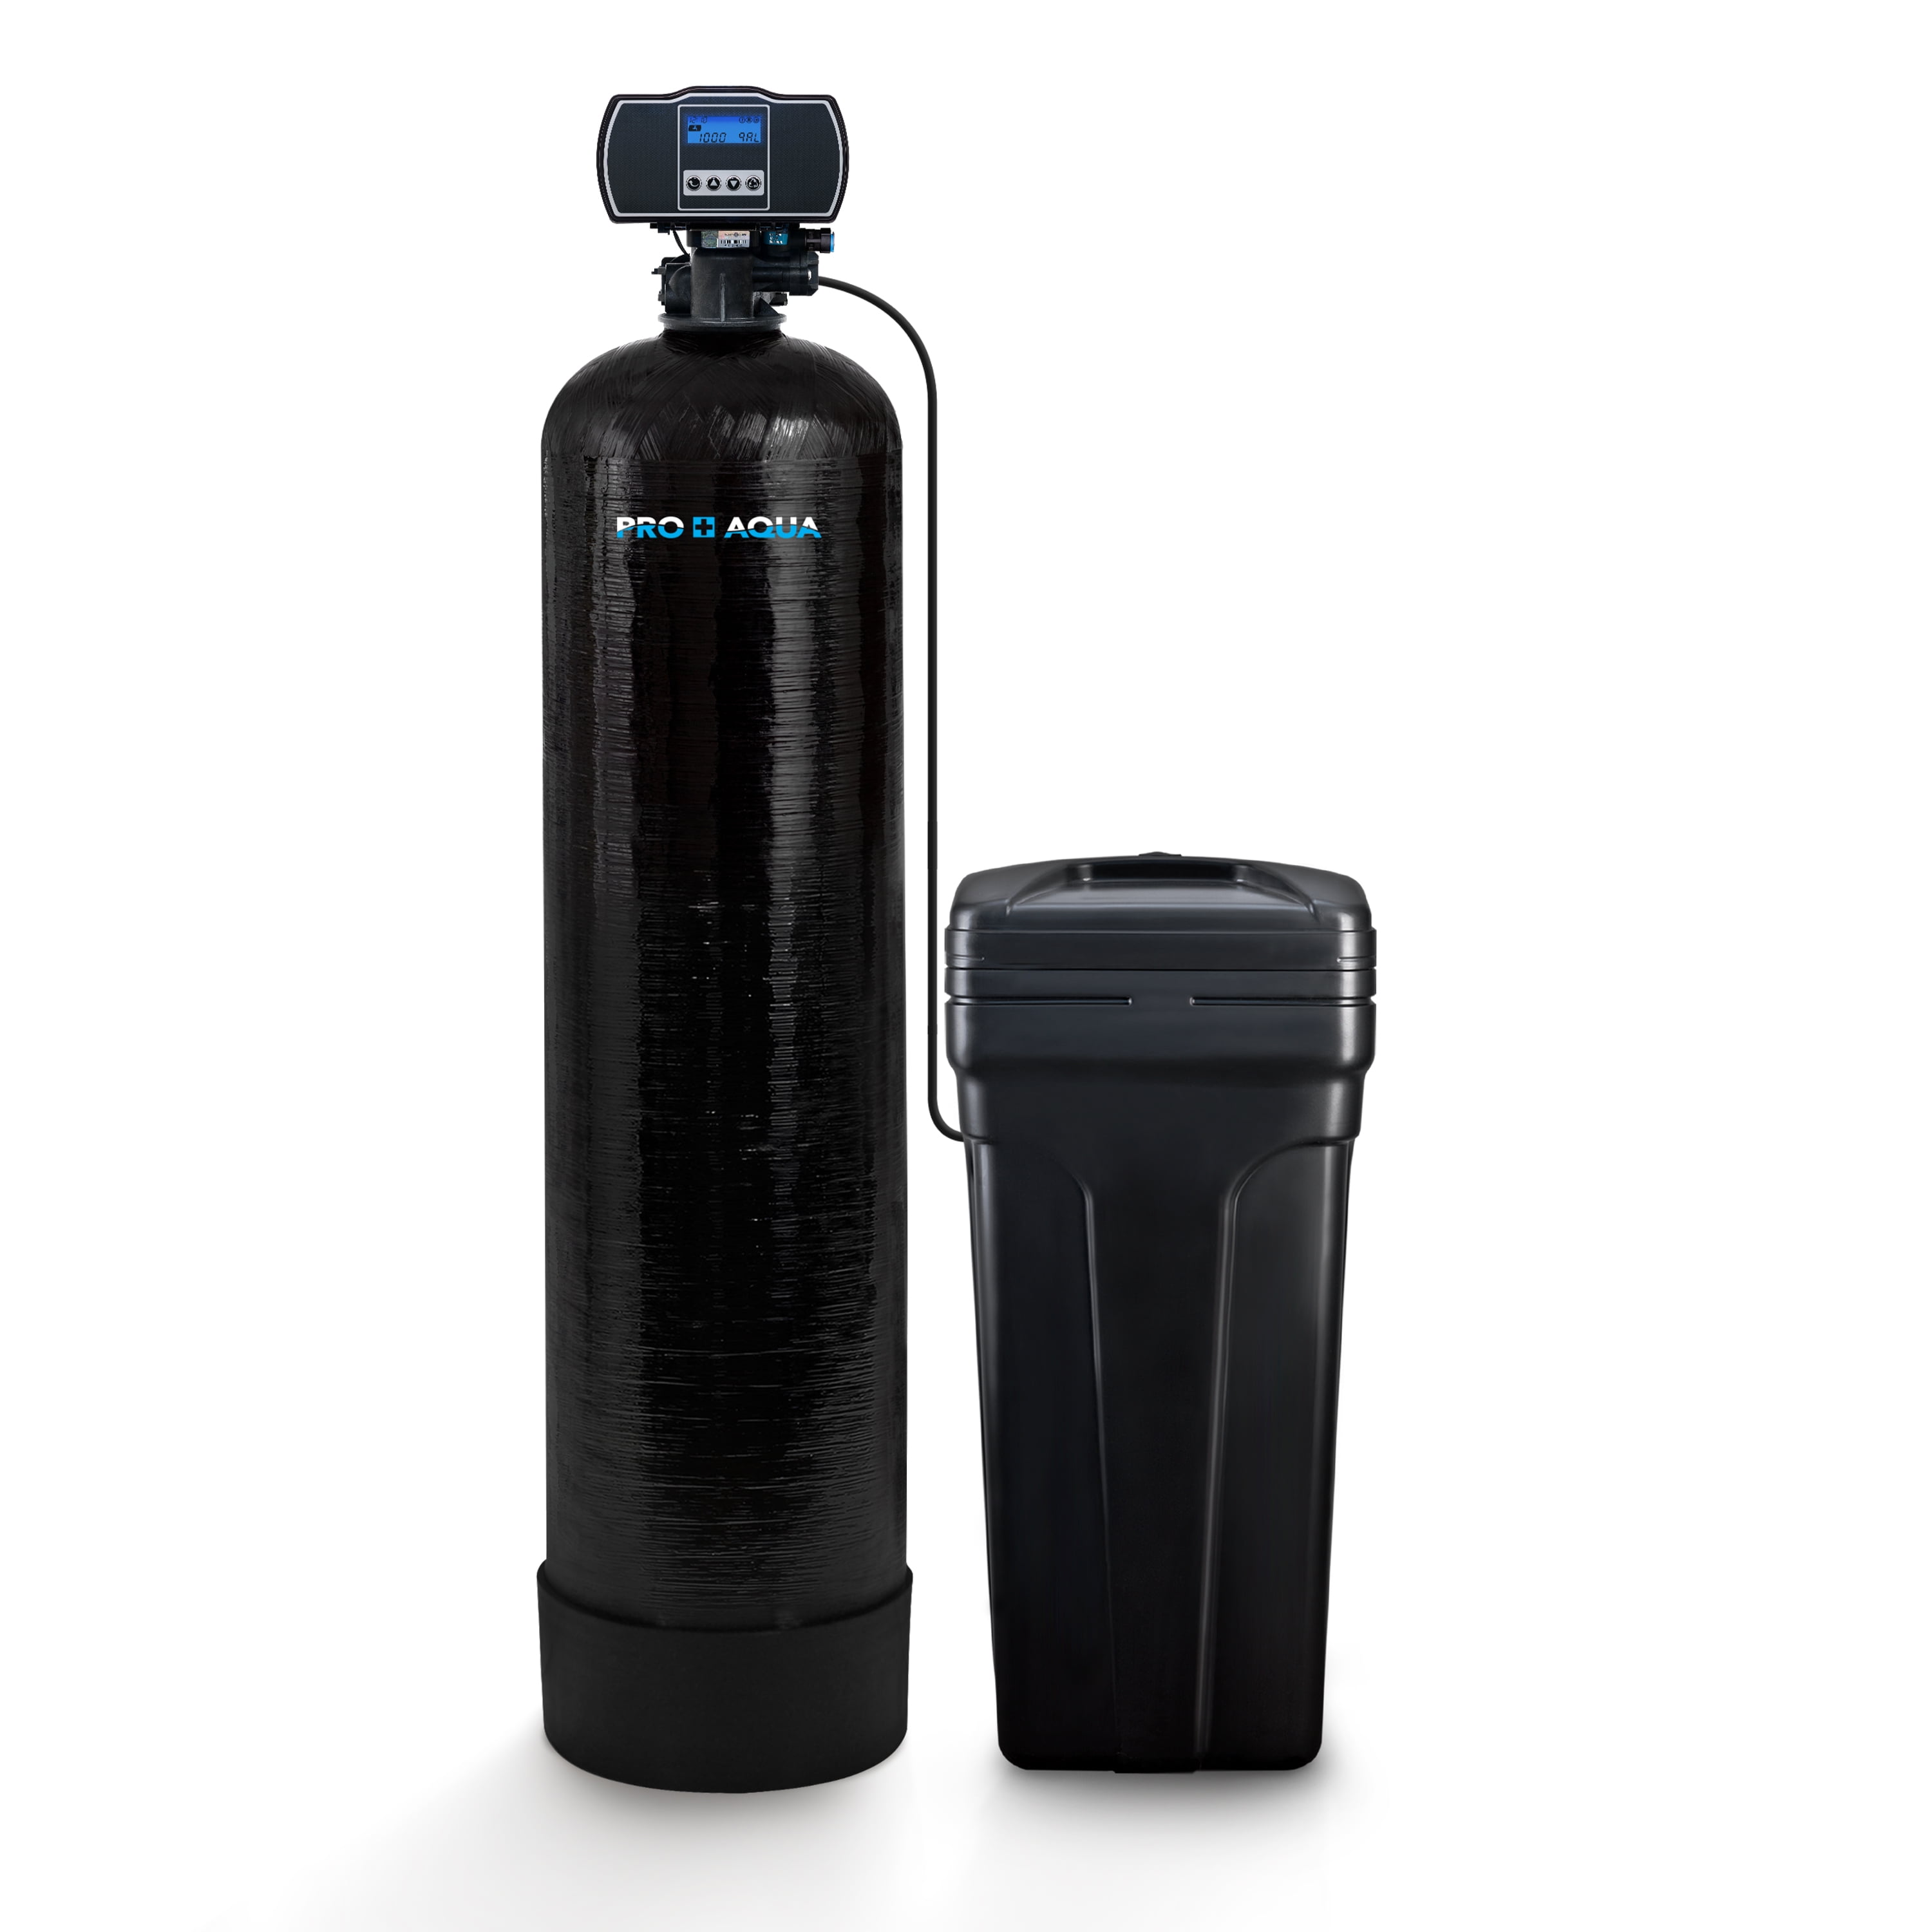 Generic Rescare Rk64n All-Purpose Water Softener Cleaner Liquid Refill